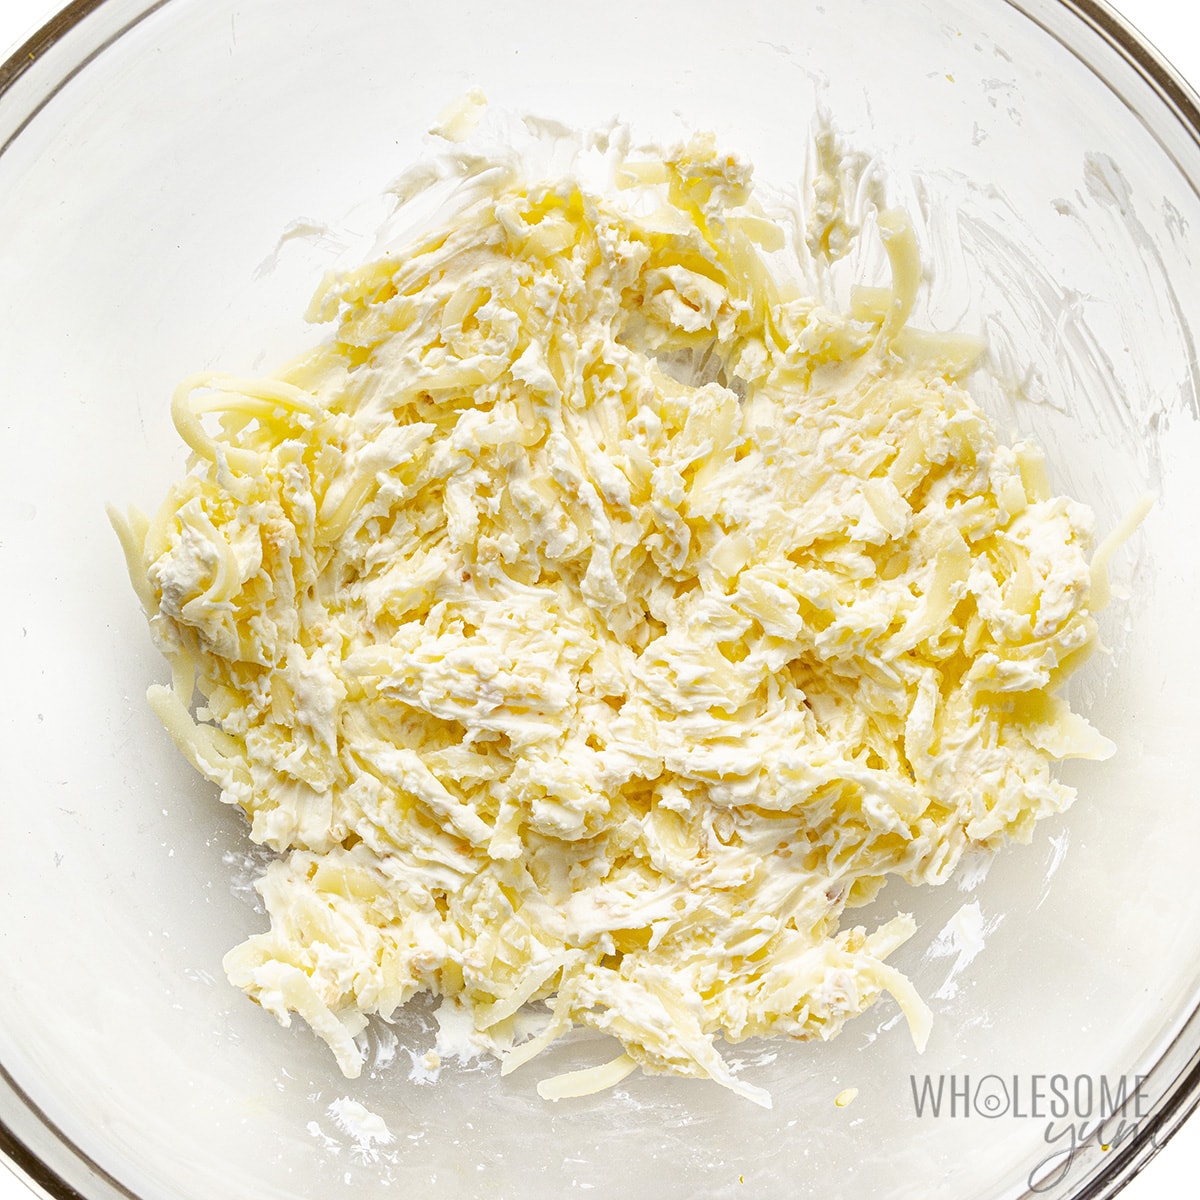 Add mozzarella cheese to mixture in bowl.